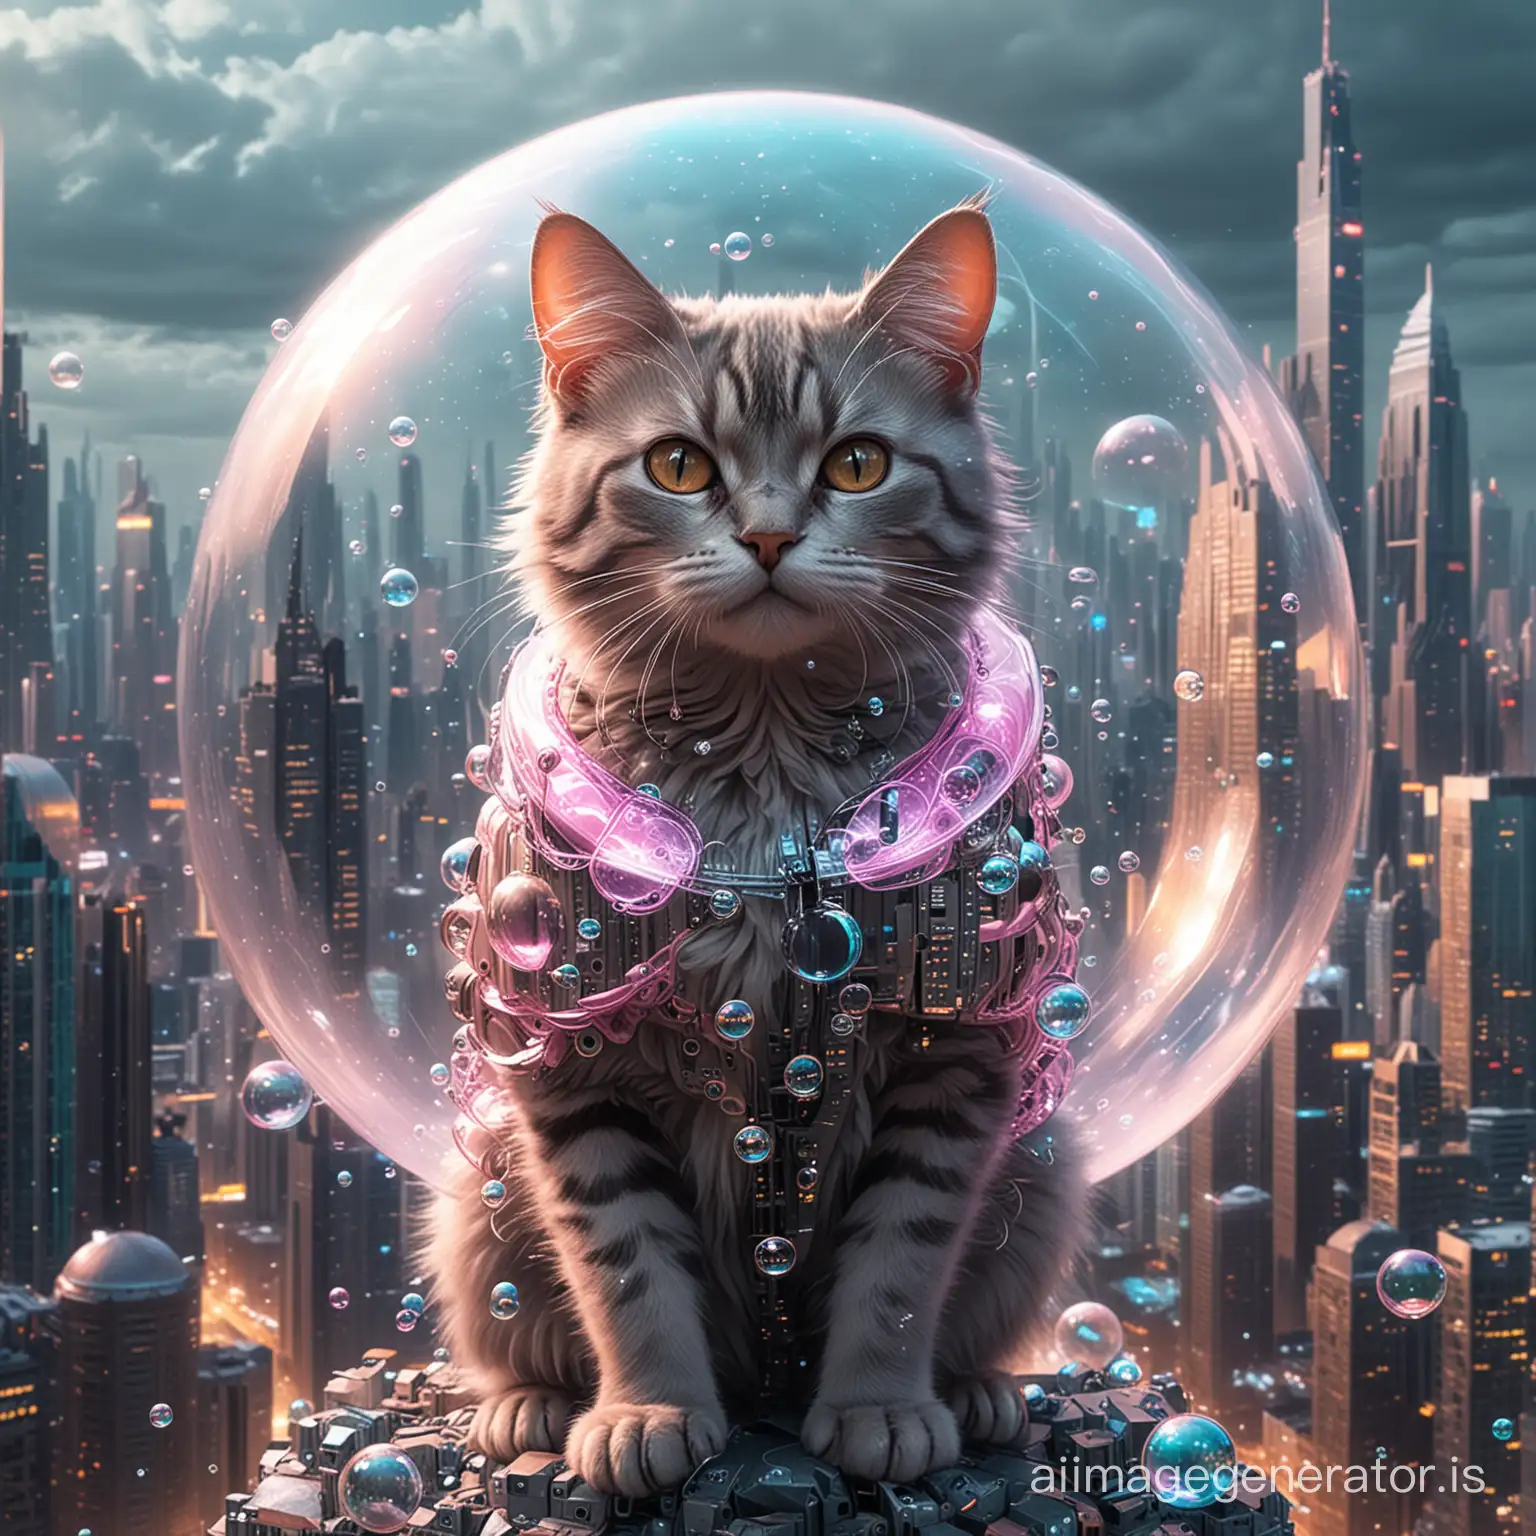 A cat wrapped in bubbles Cyberpunk Skyscrapers